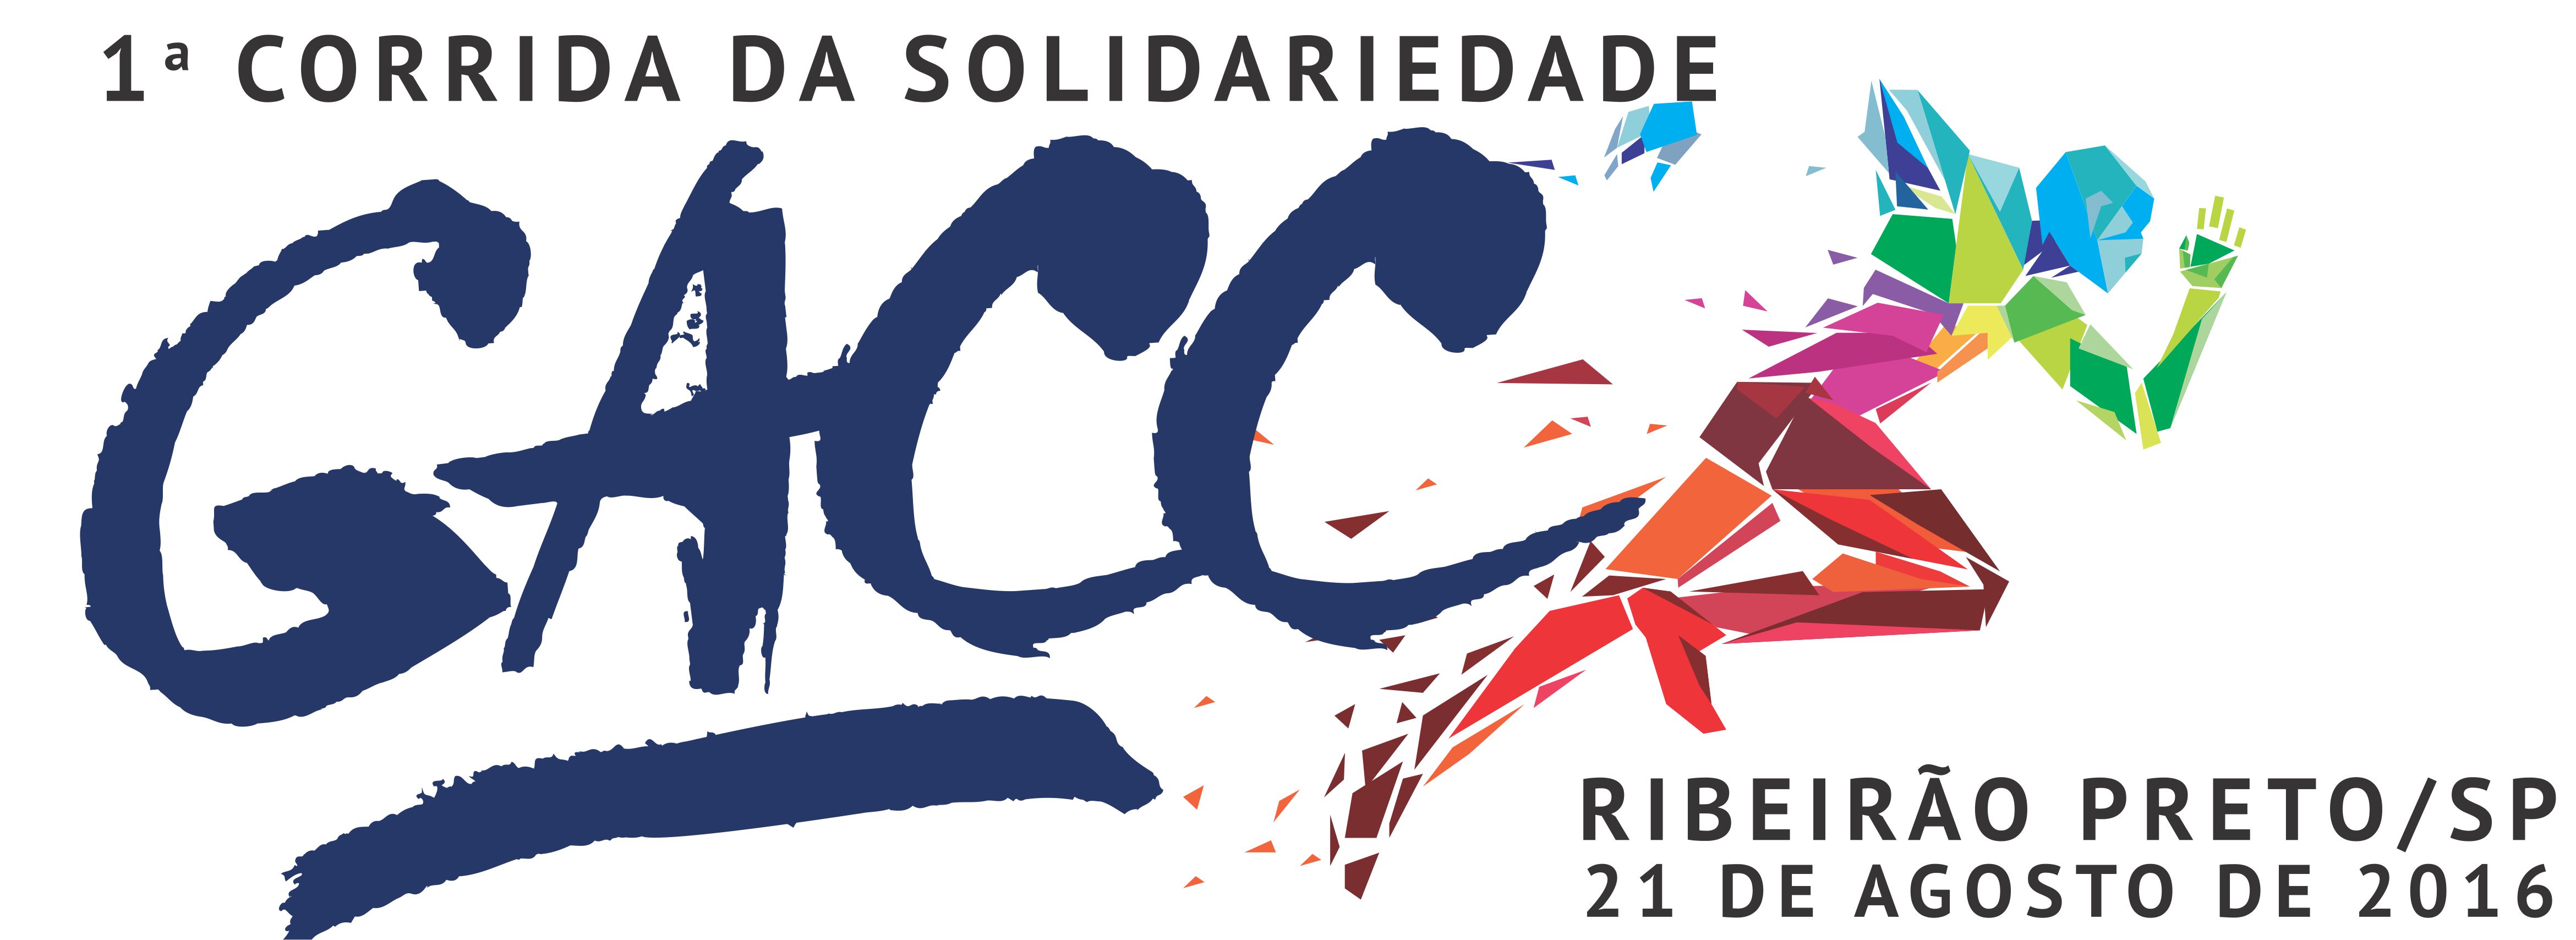 corrida-gacc-ribeirao-preto-2016